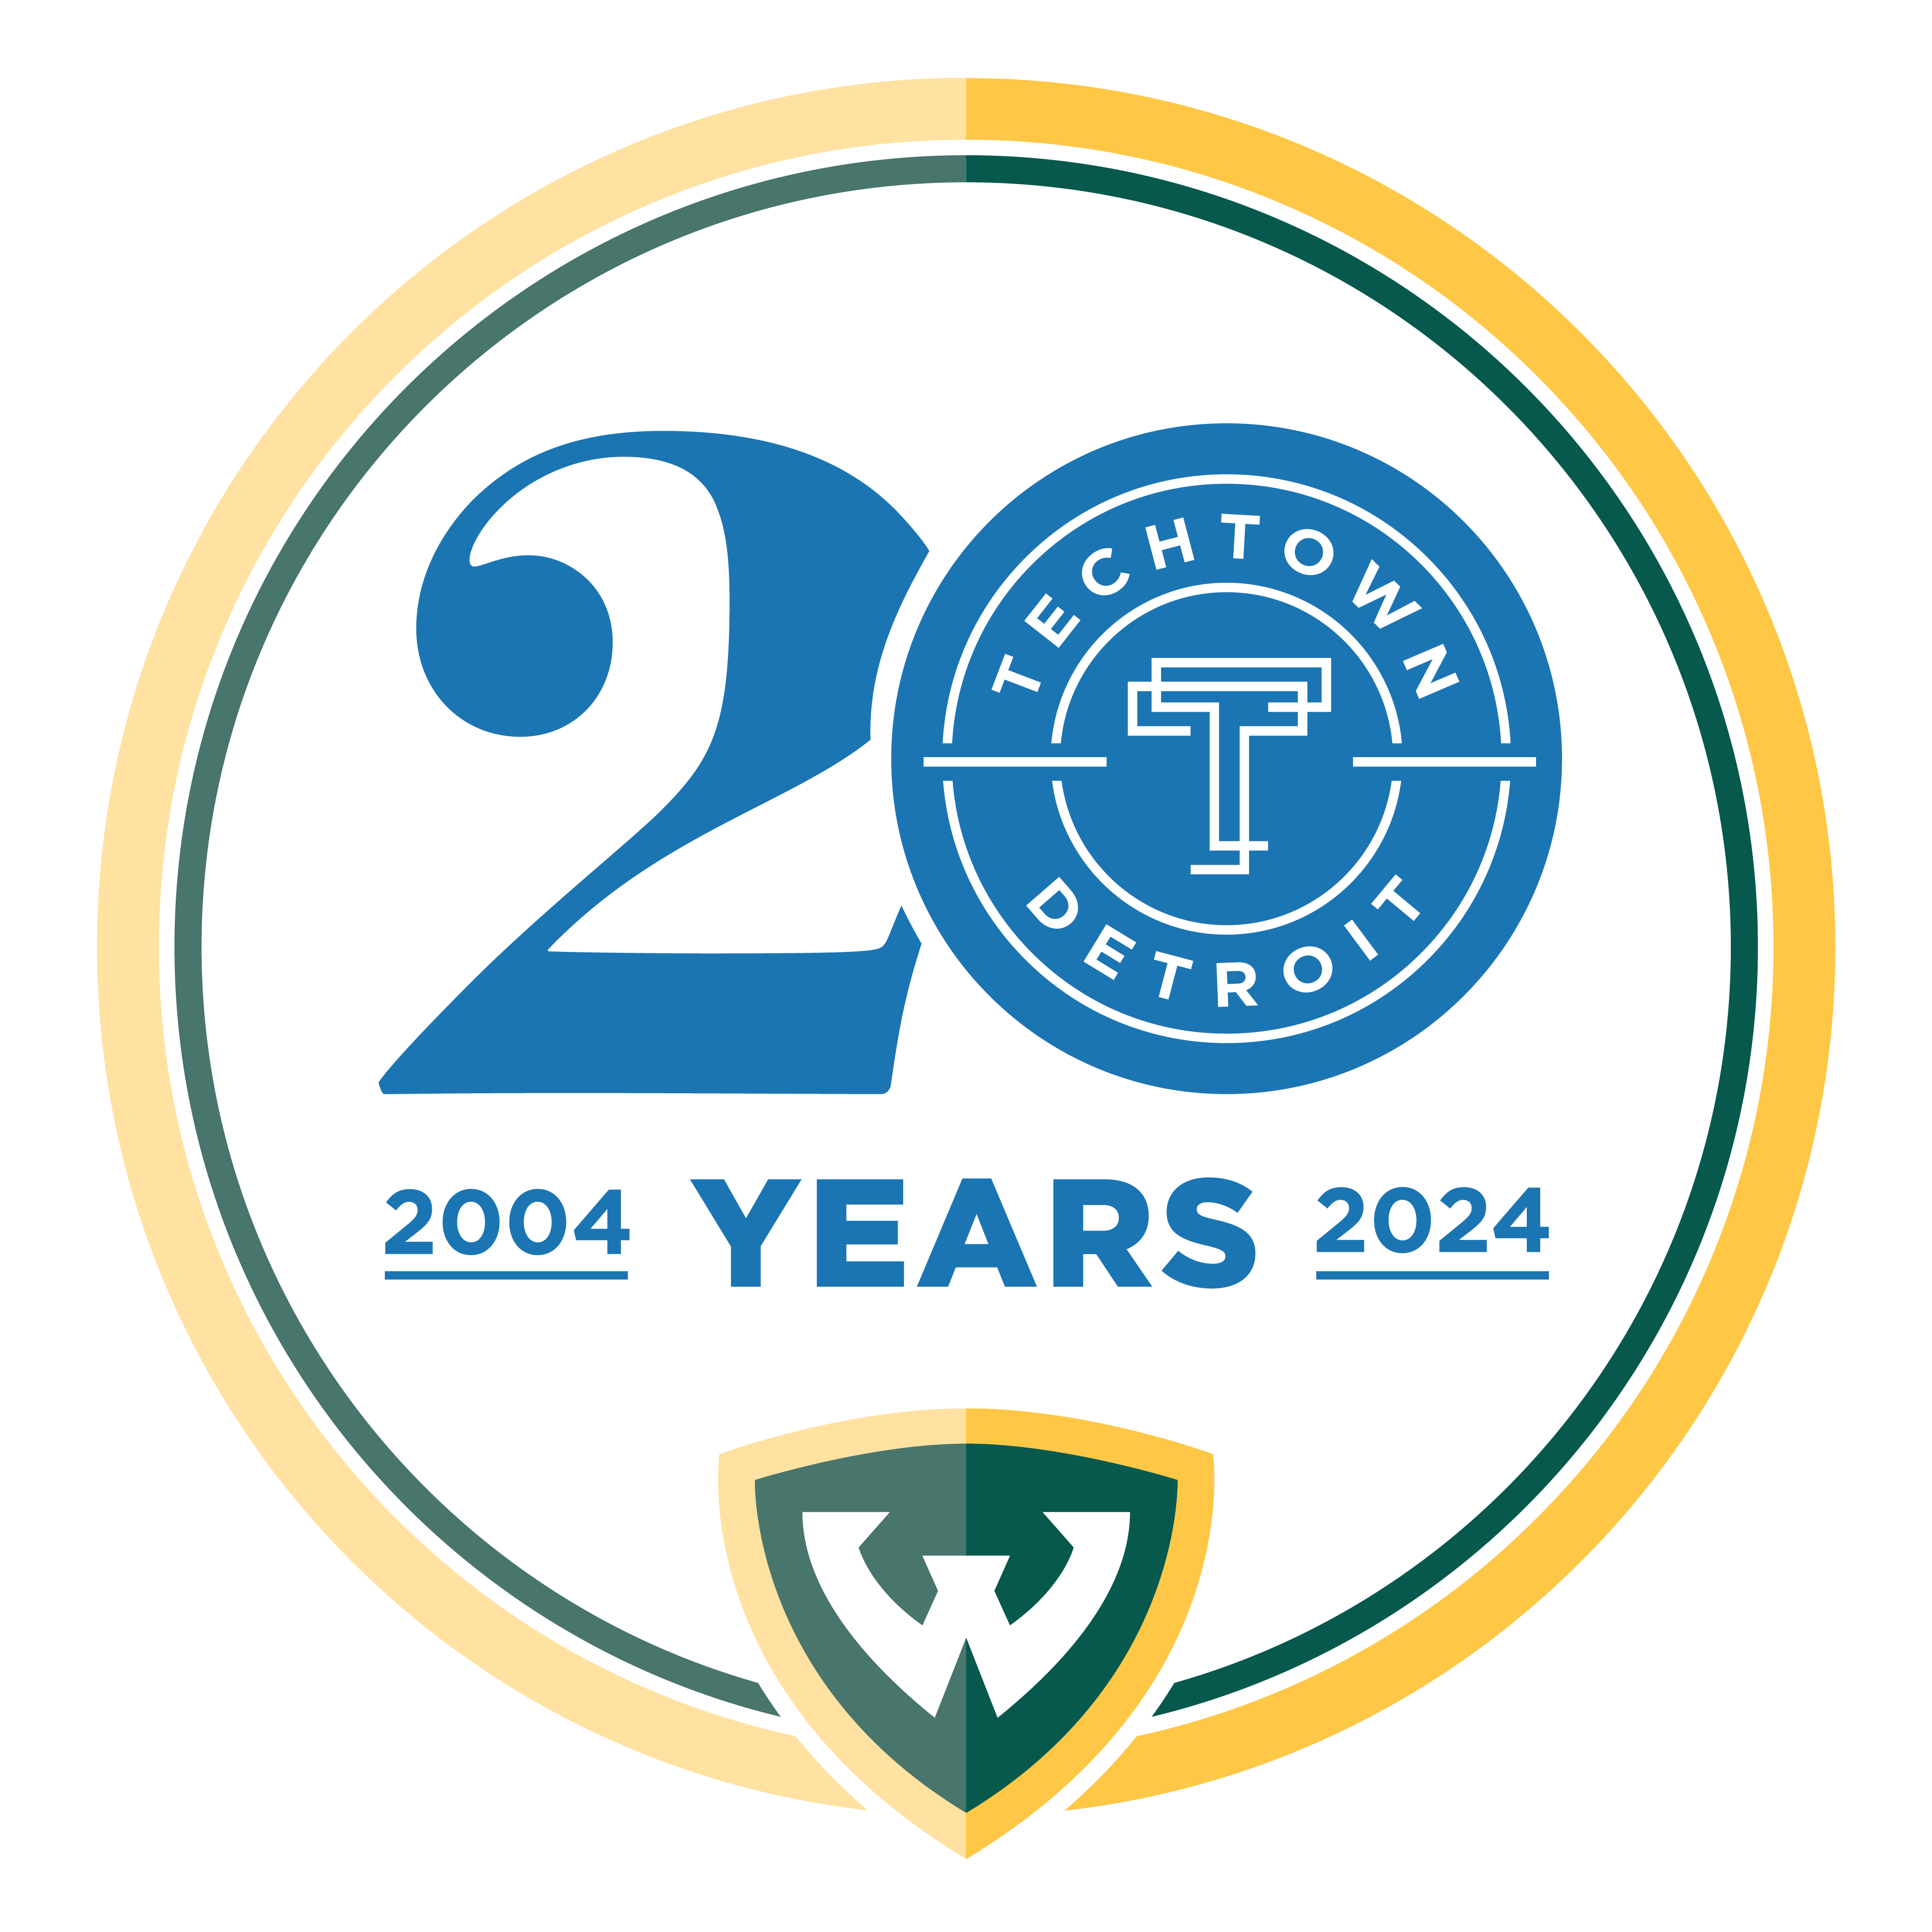 TechTown 20th Year Anniversary Logo 